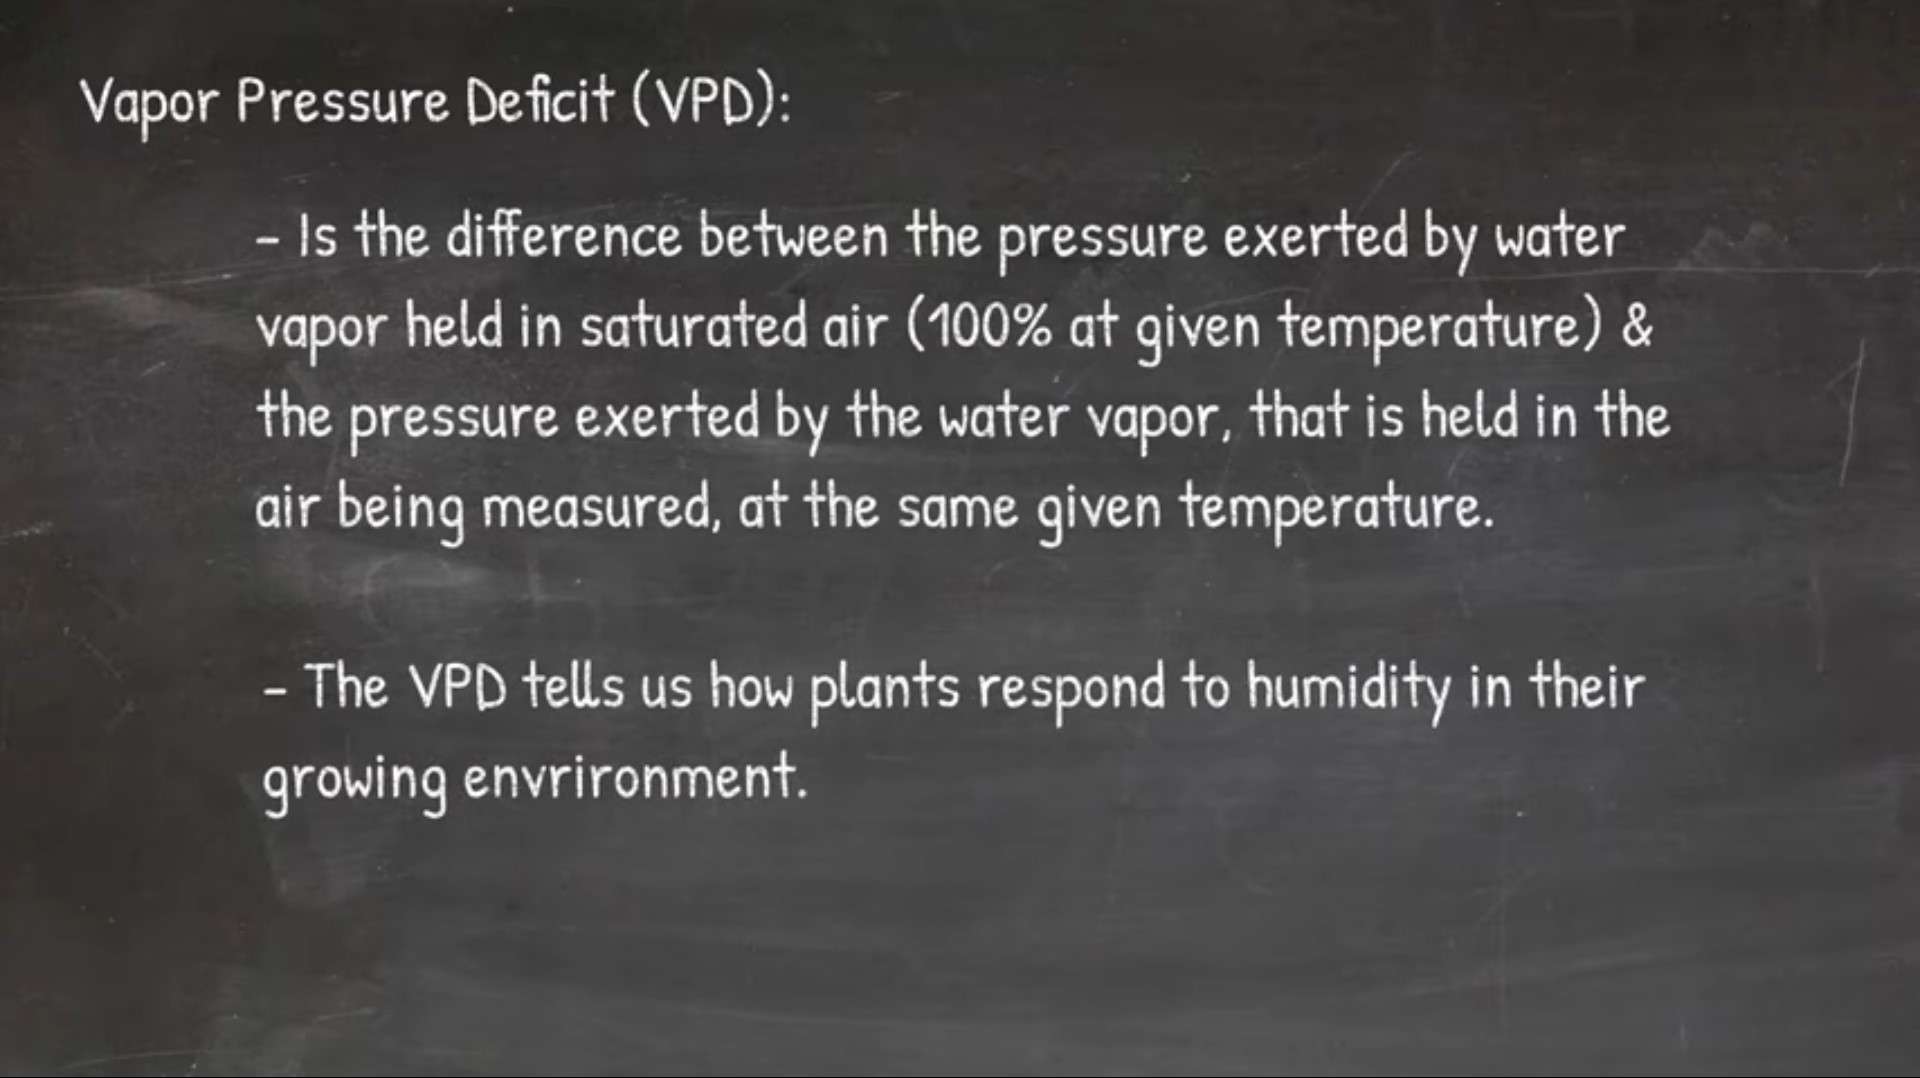 VPD (vapor pressure deficit)